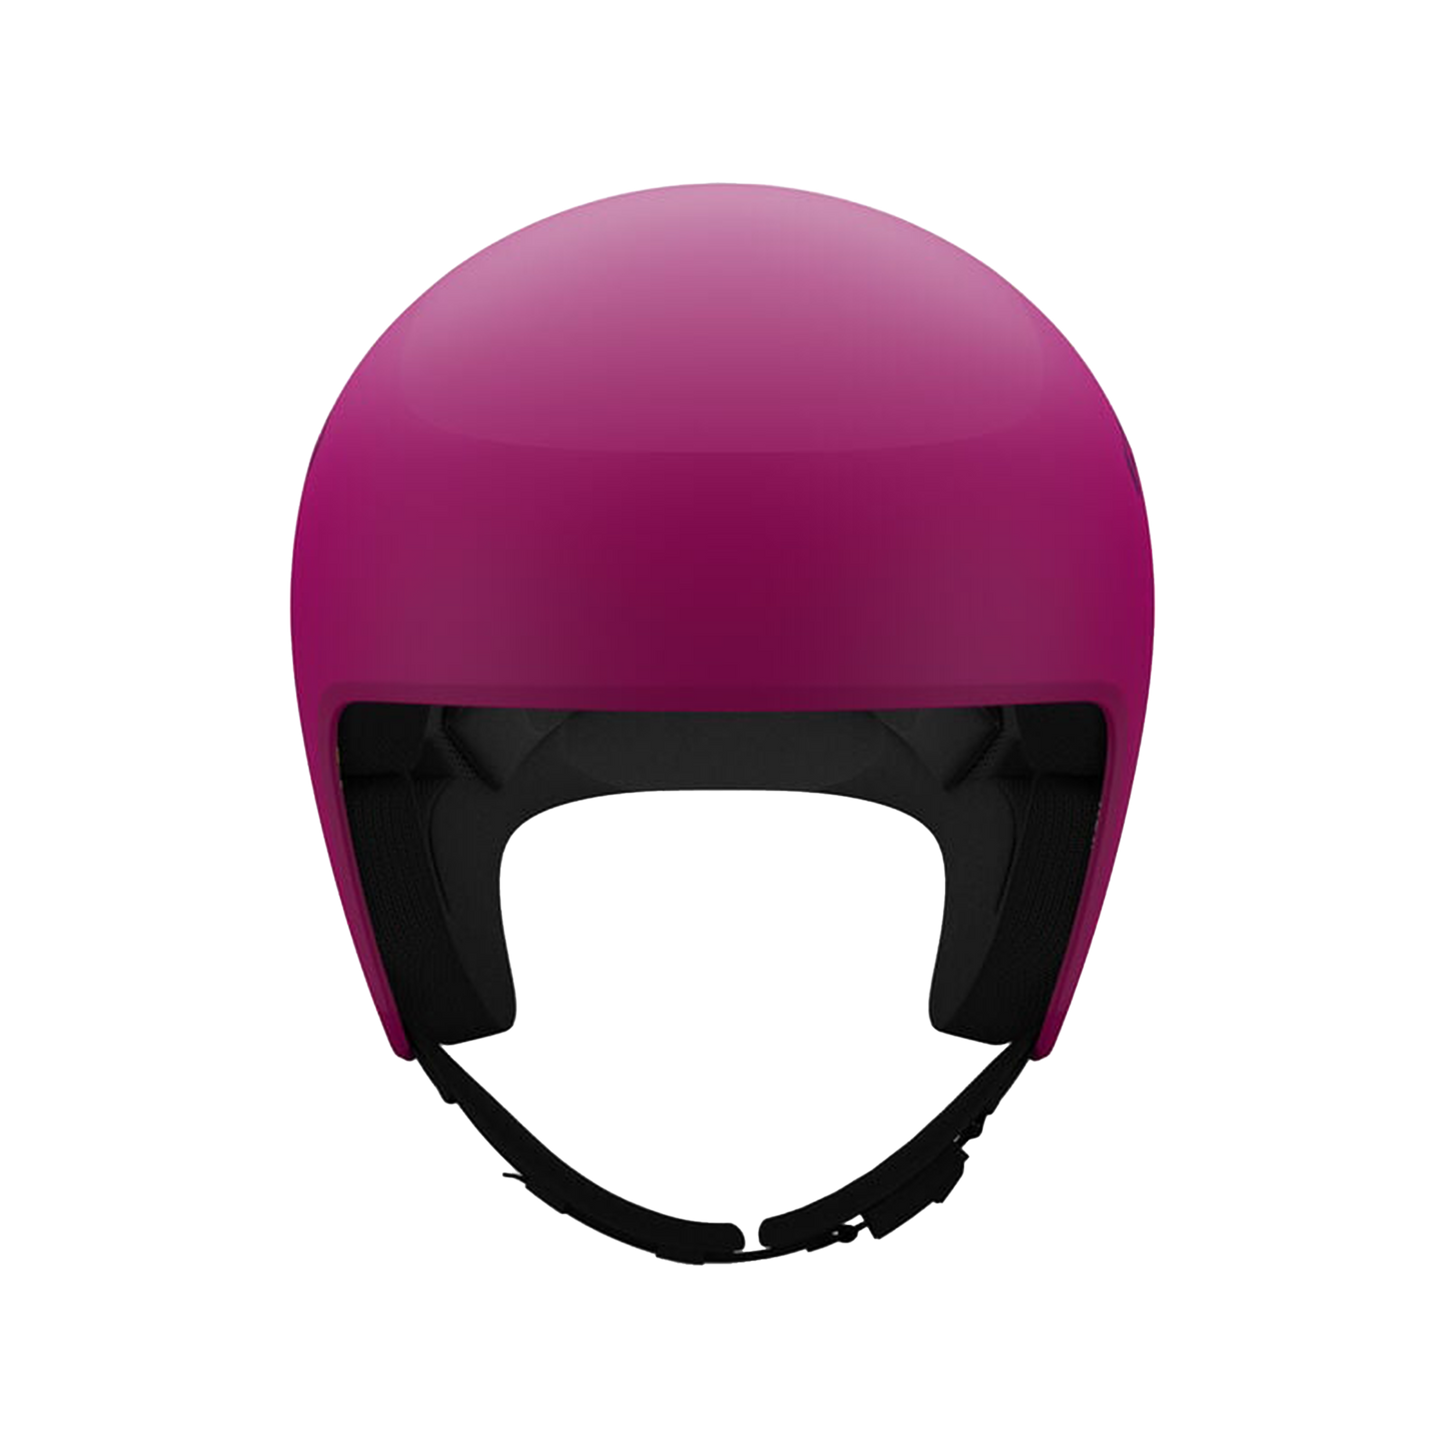 Giro Signes Spherical Helmet Pink Cover Up Snow Helmets